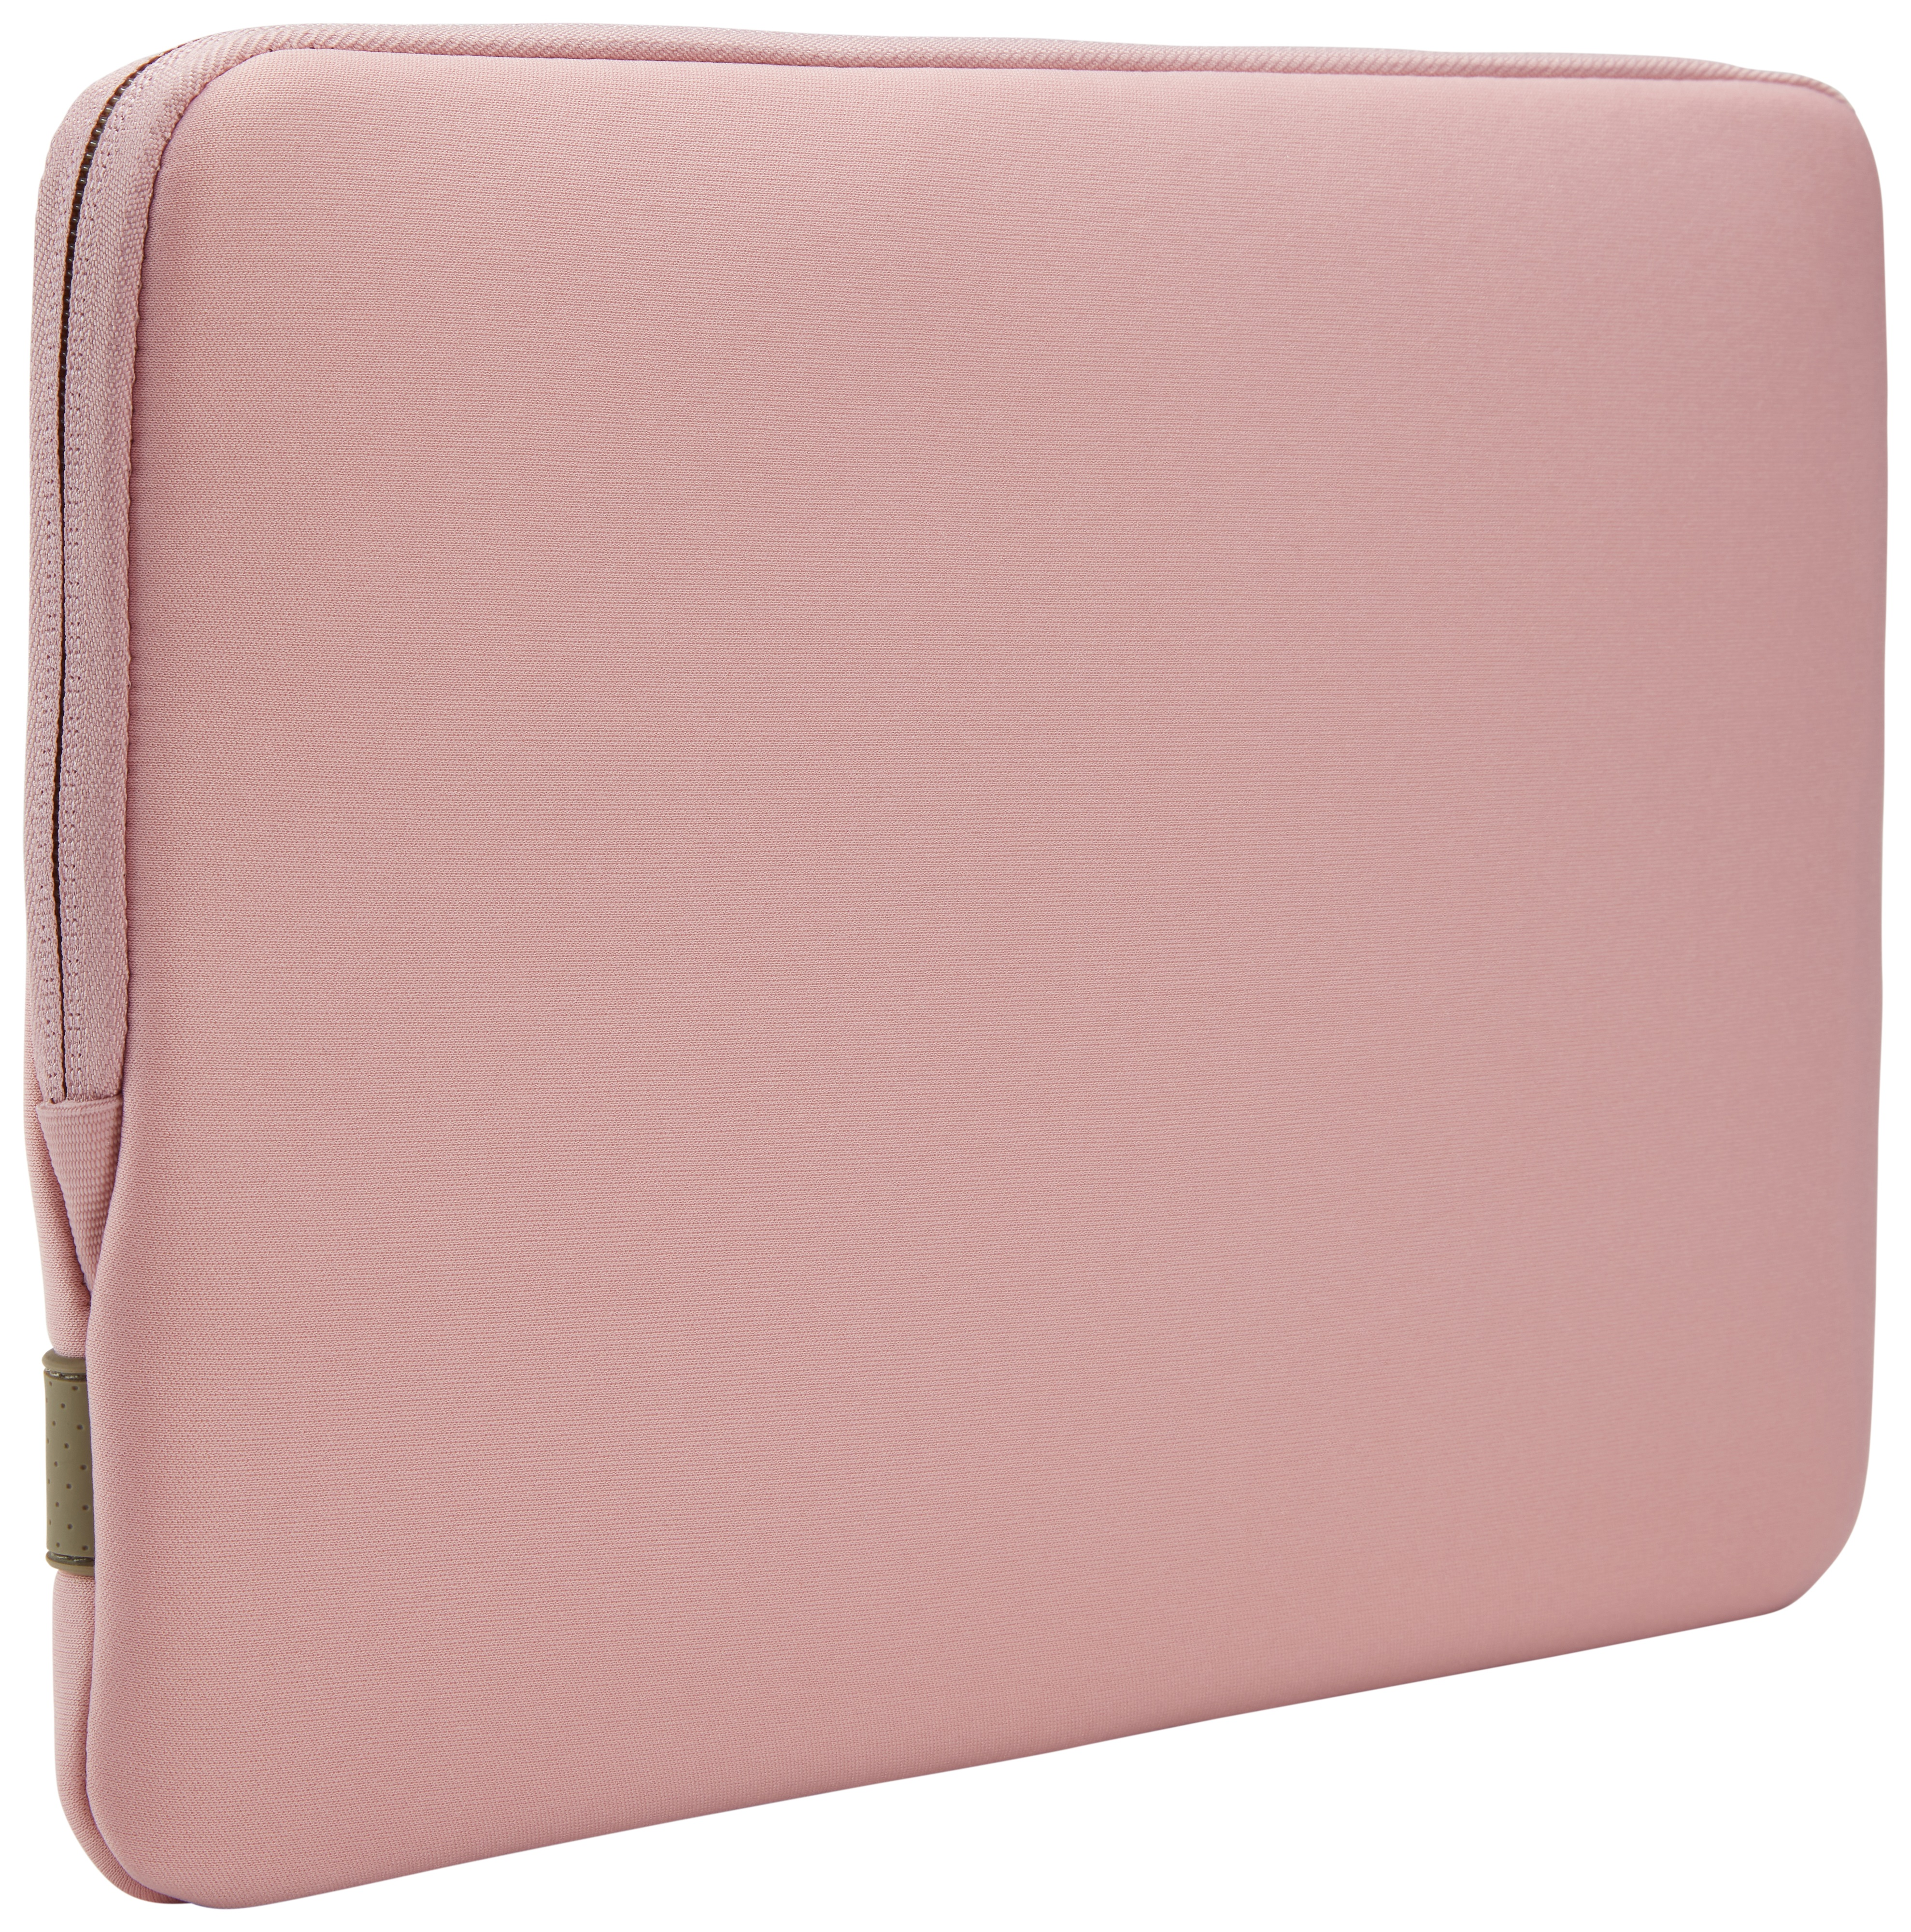 CASE LOGIC Reflect Notebook sleeve Polyester, Zephyr Pink/Mermaid Sleeve für Universal